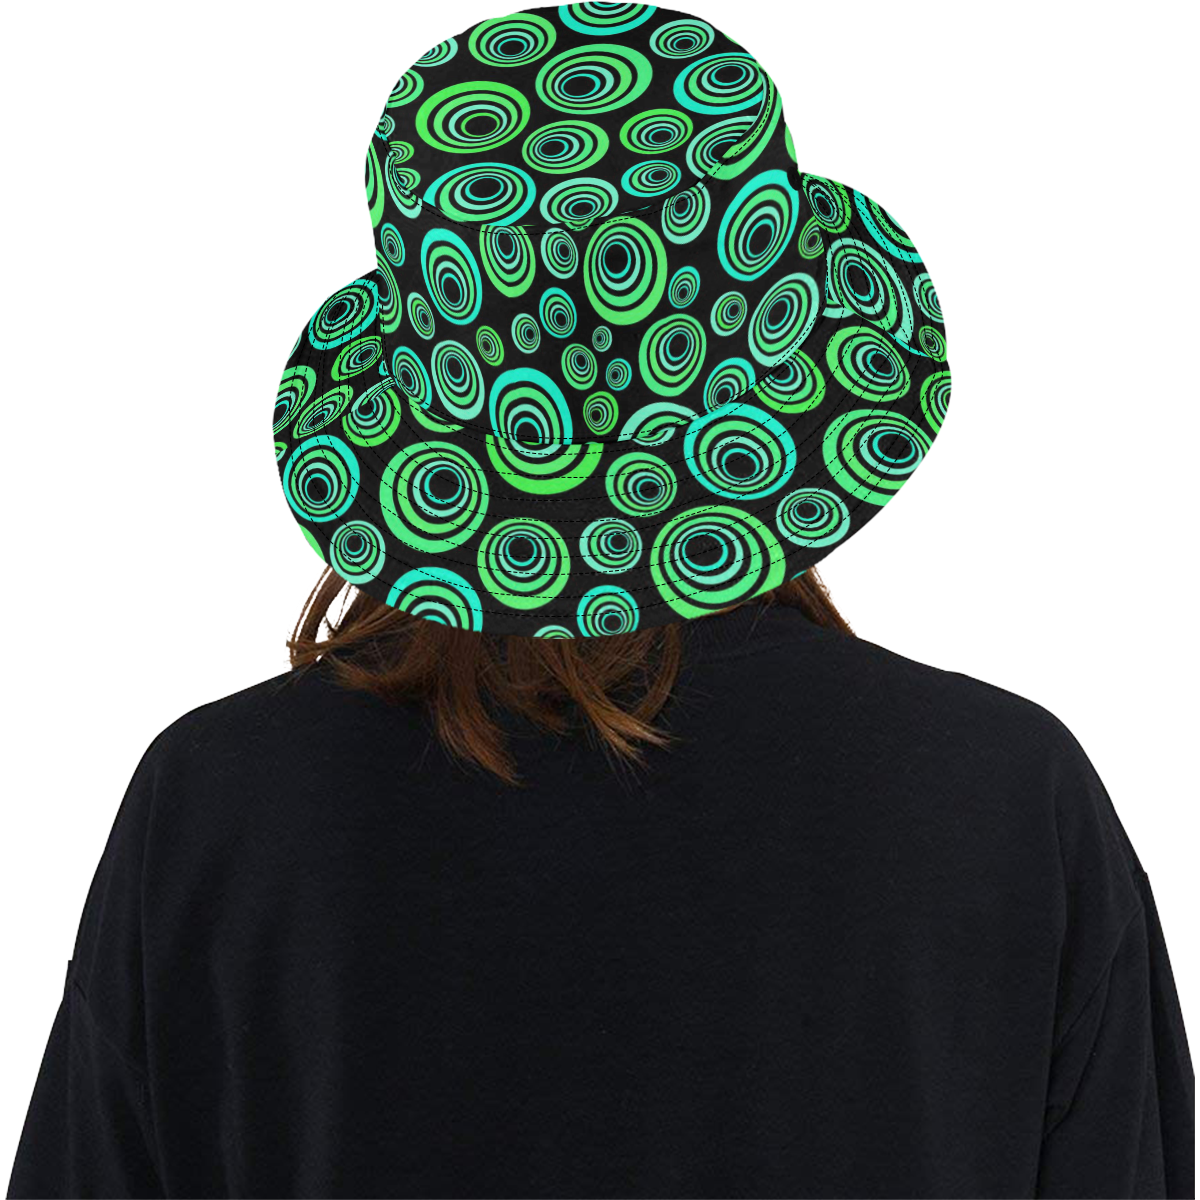 Crazy Fun Neon Blue & Green retro pattern All Over Print Bucket Hat